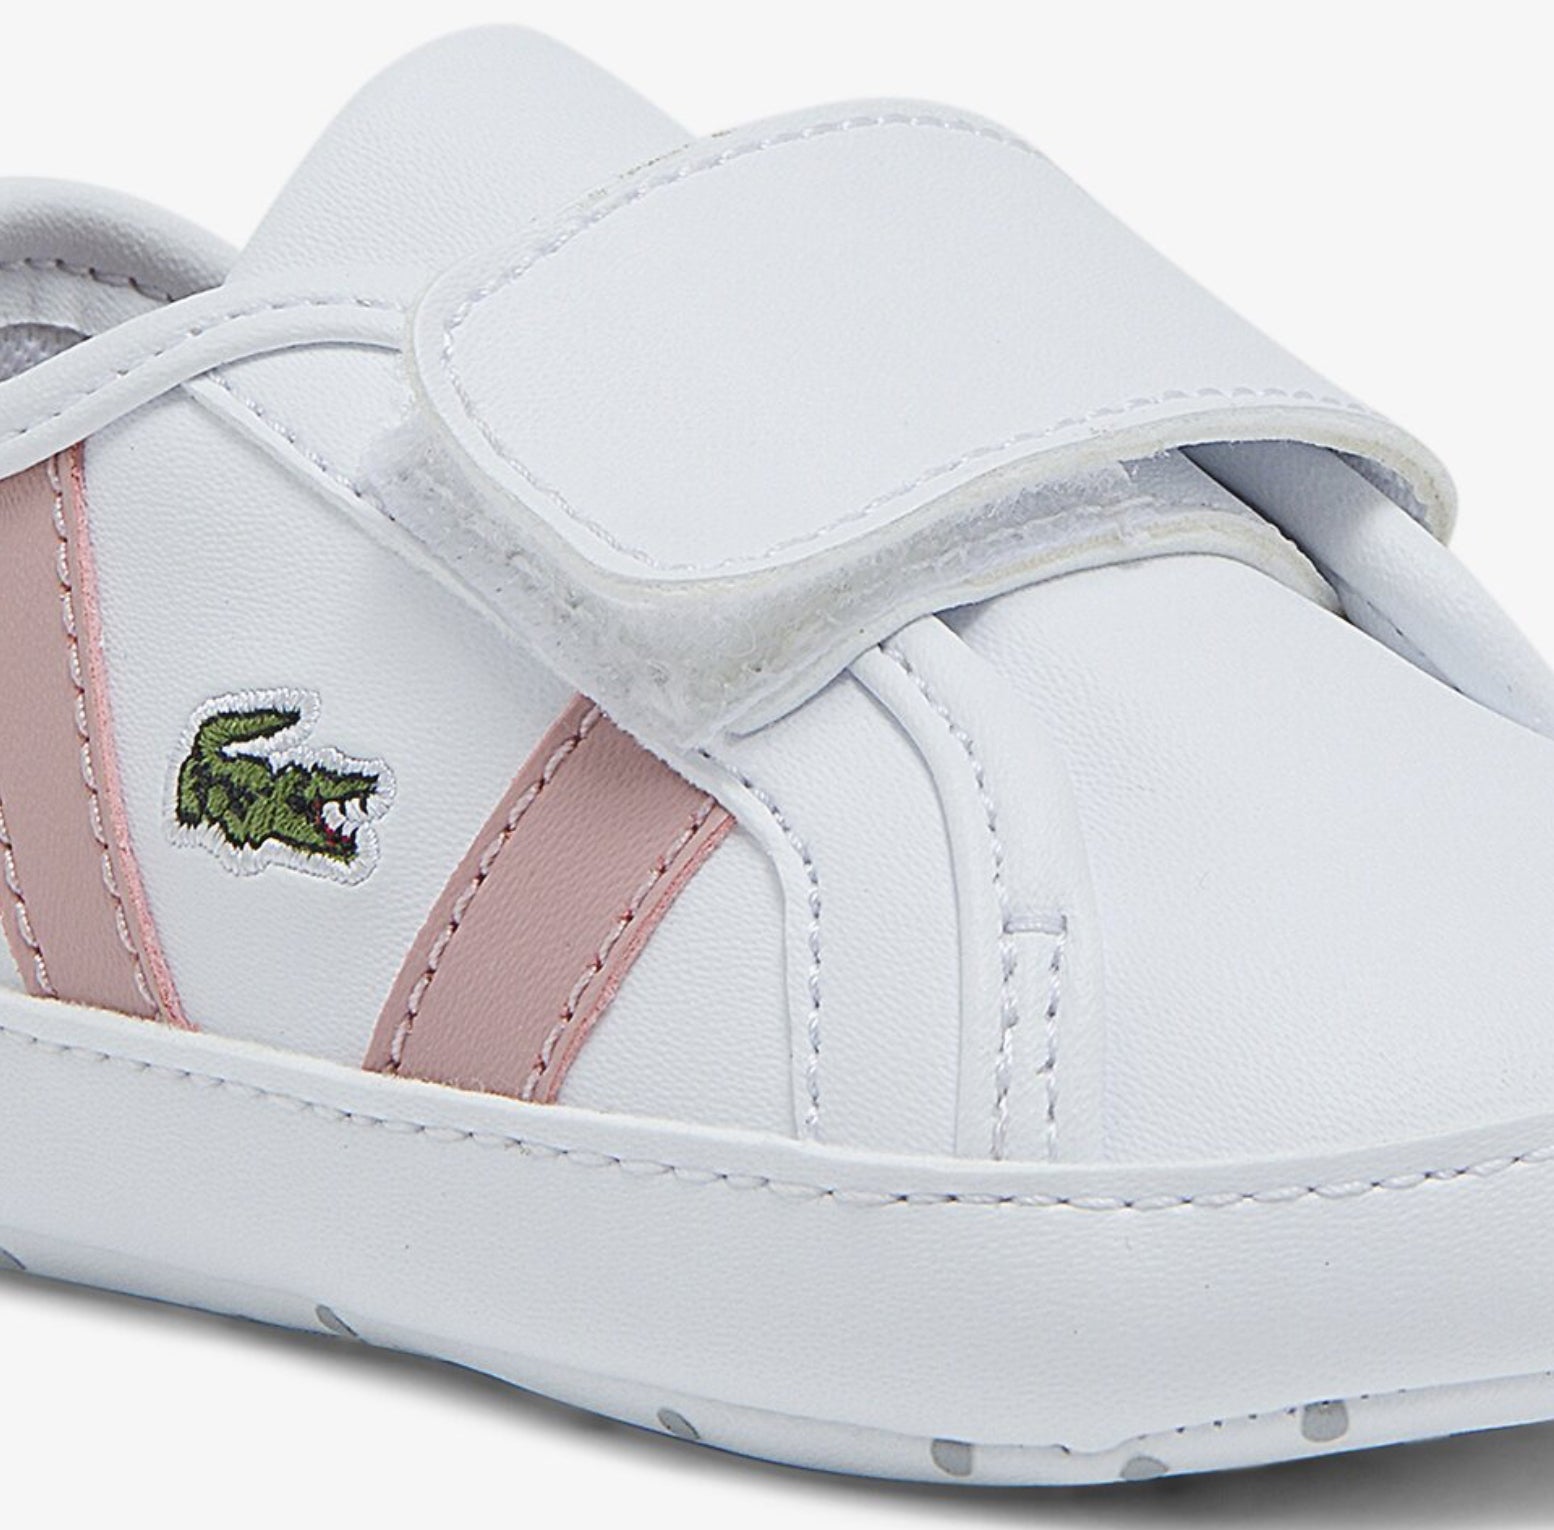 Lacoste - Sideline Infant Crib Sneaker - White/Pink